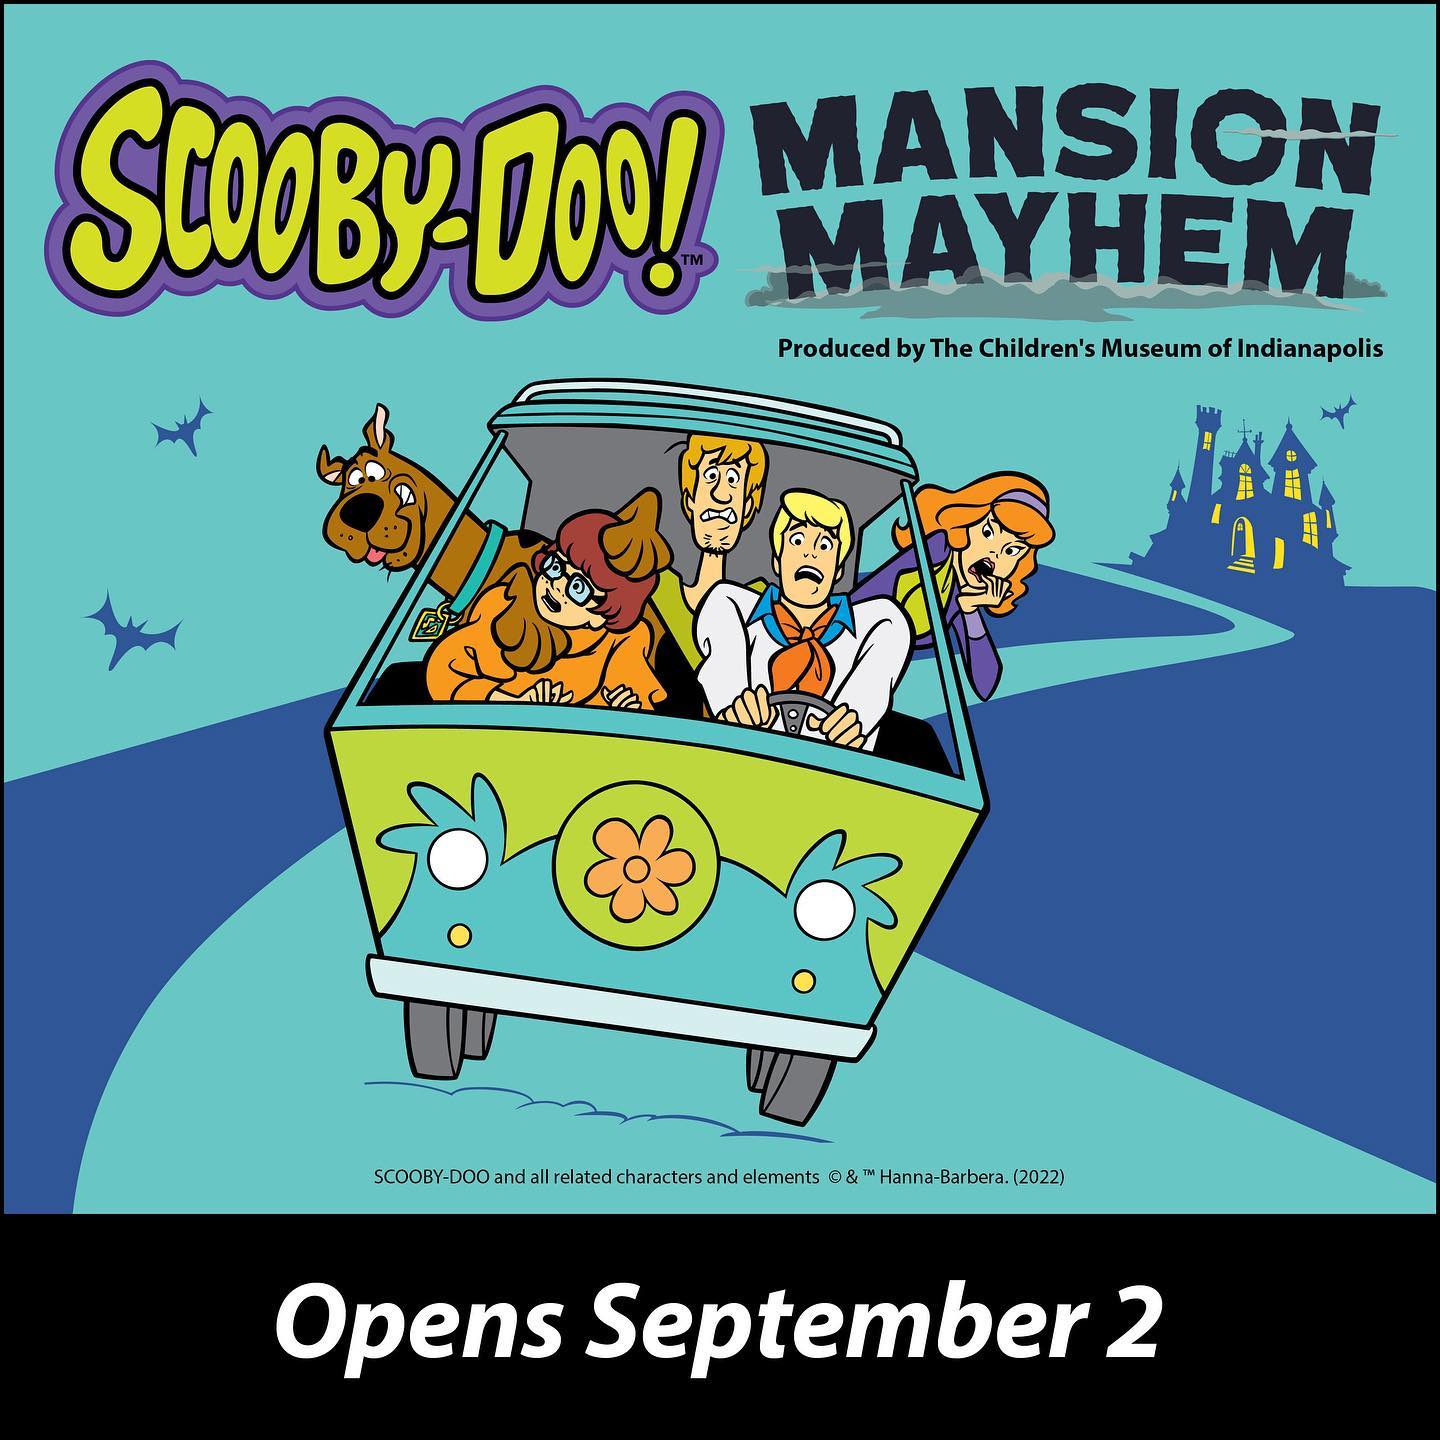 SCOOBY-DOO!™ Mansion Mayhem